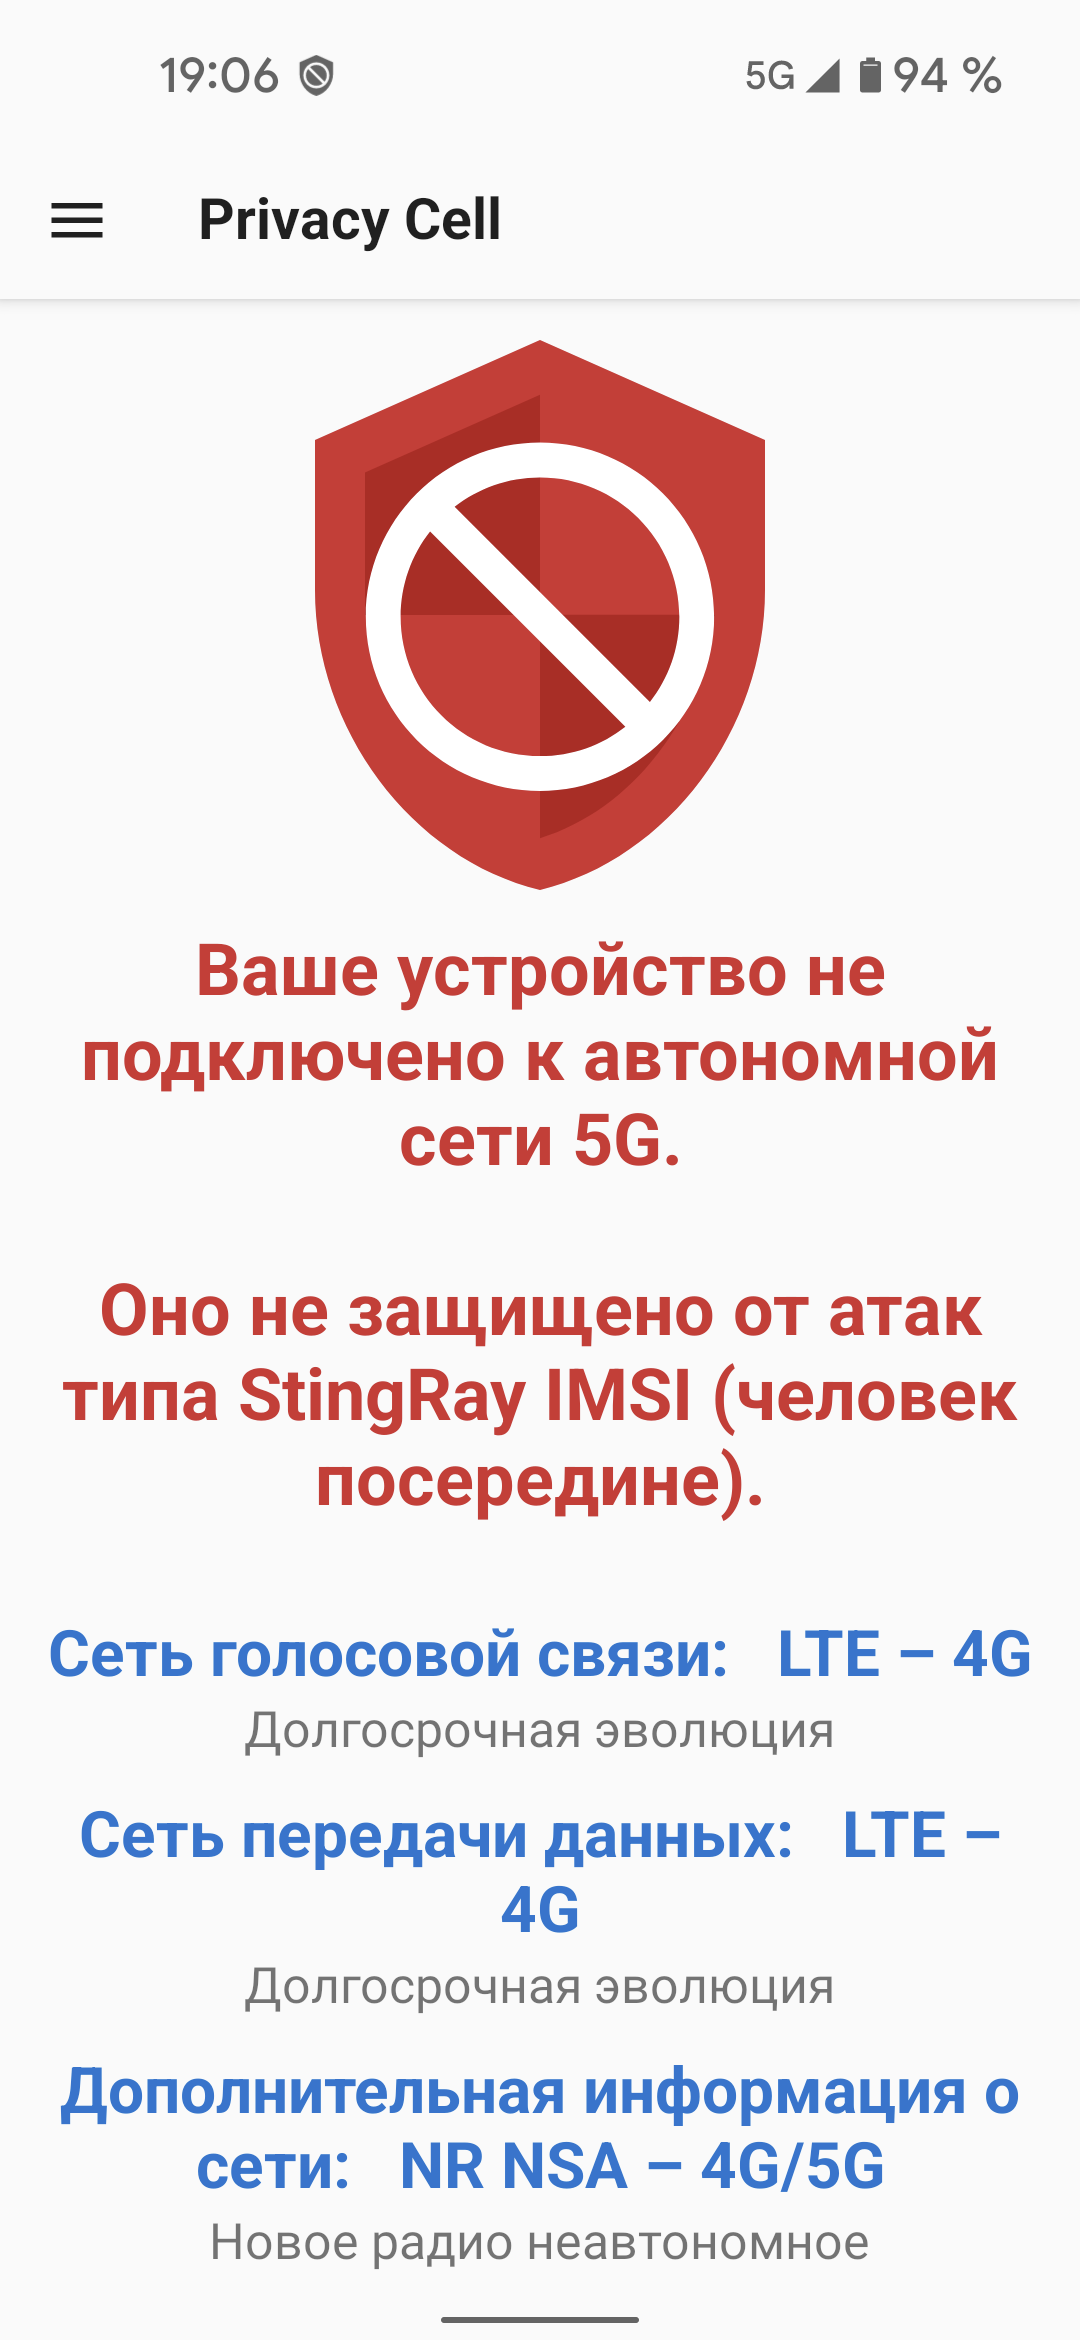 fastlane/metadata/android/ru-RU/images/phoneScreenshots/02-Standalone5G-ru.png